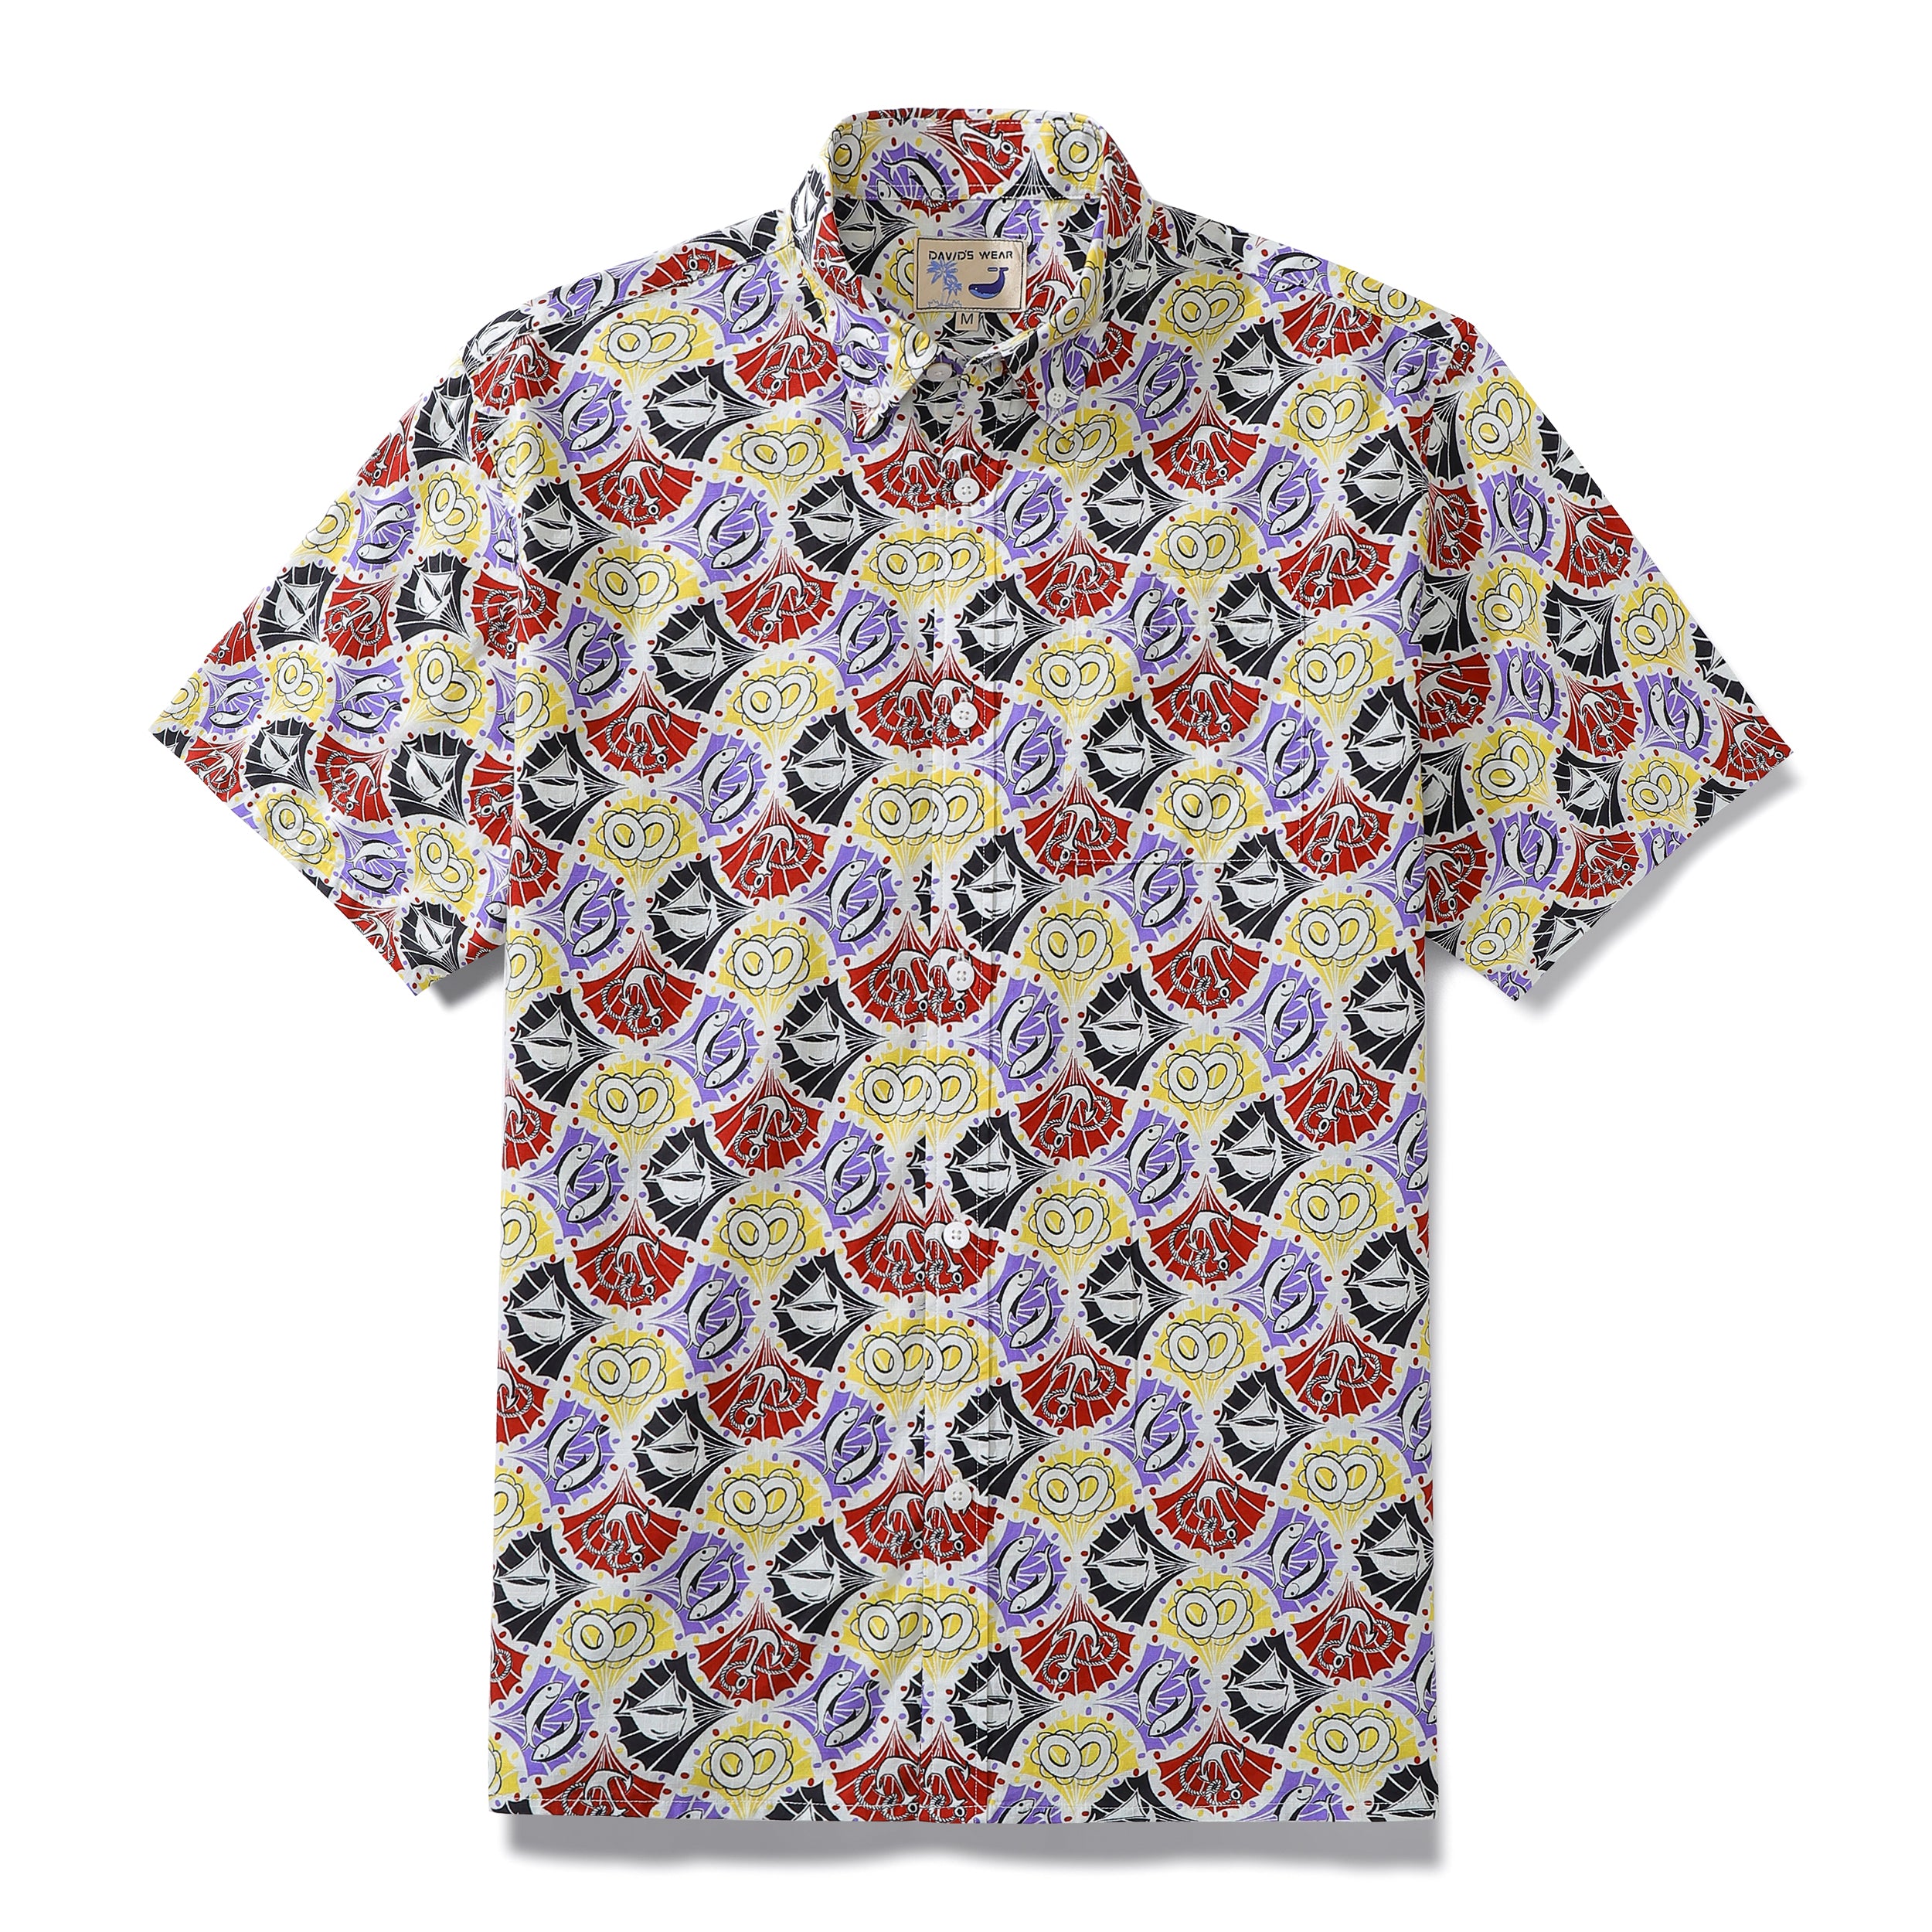 Hawaiian Shirt For Men Vintage Old Navy Fish And Anchor Print Cotton S ...